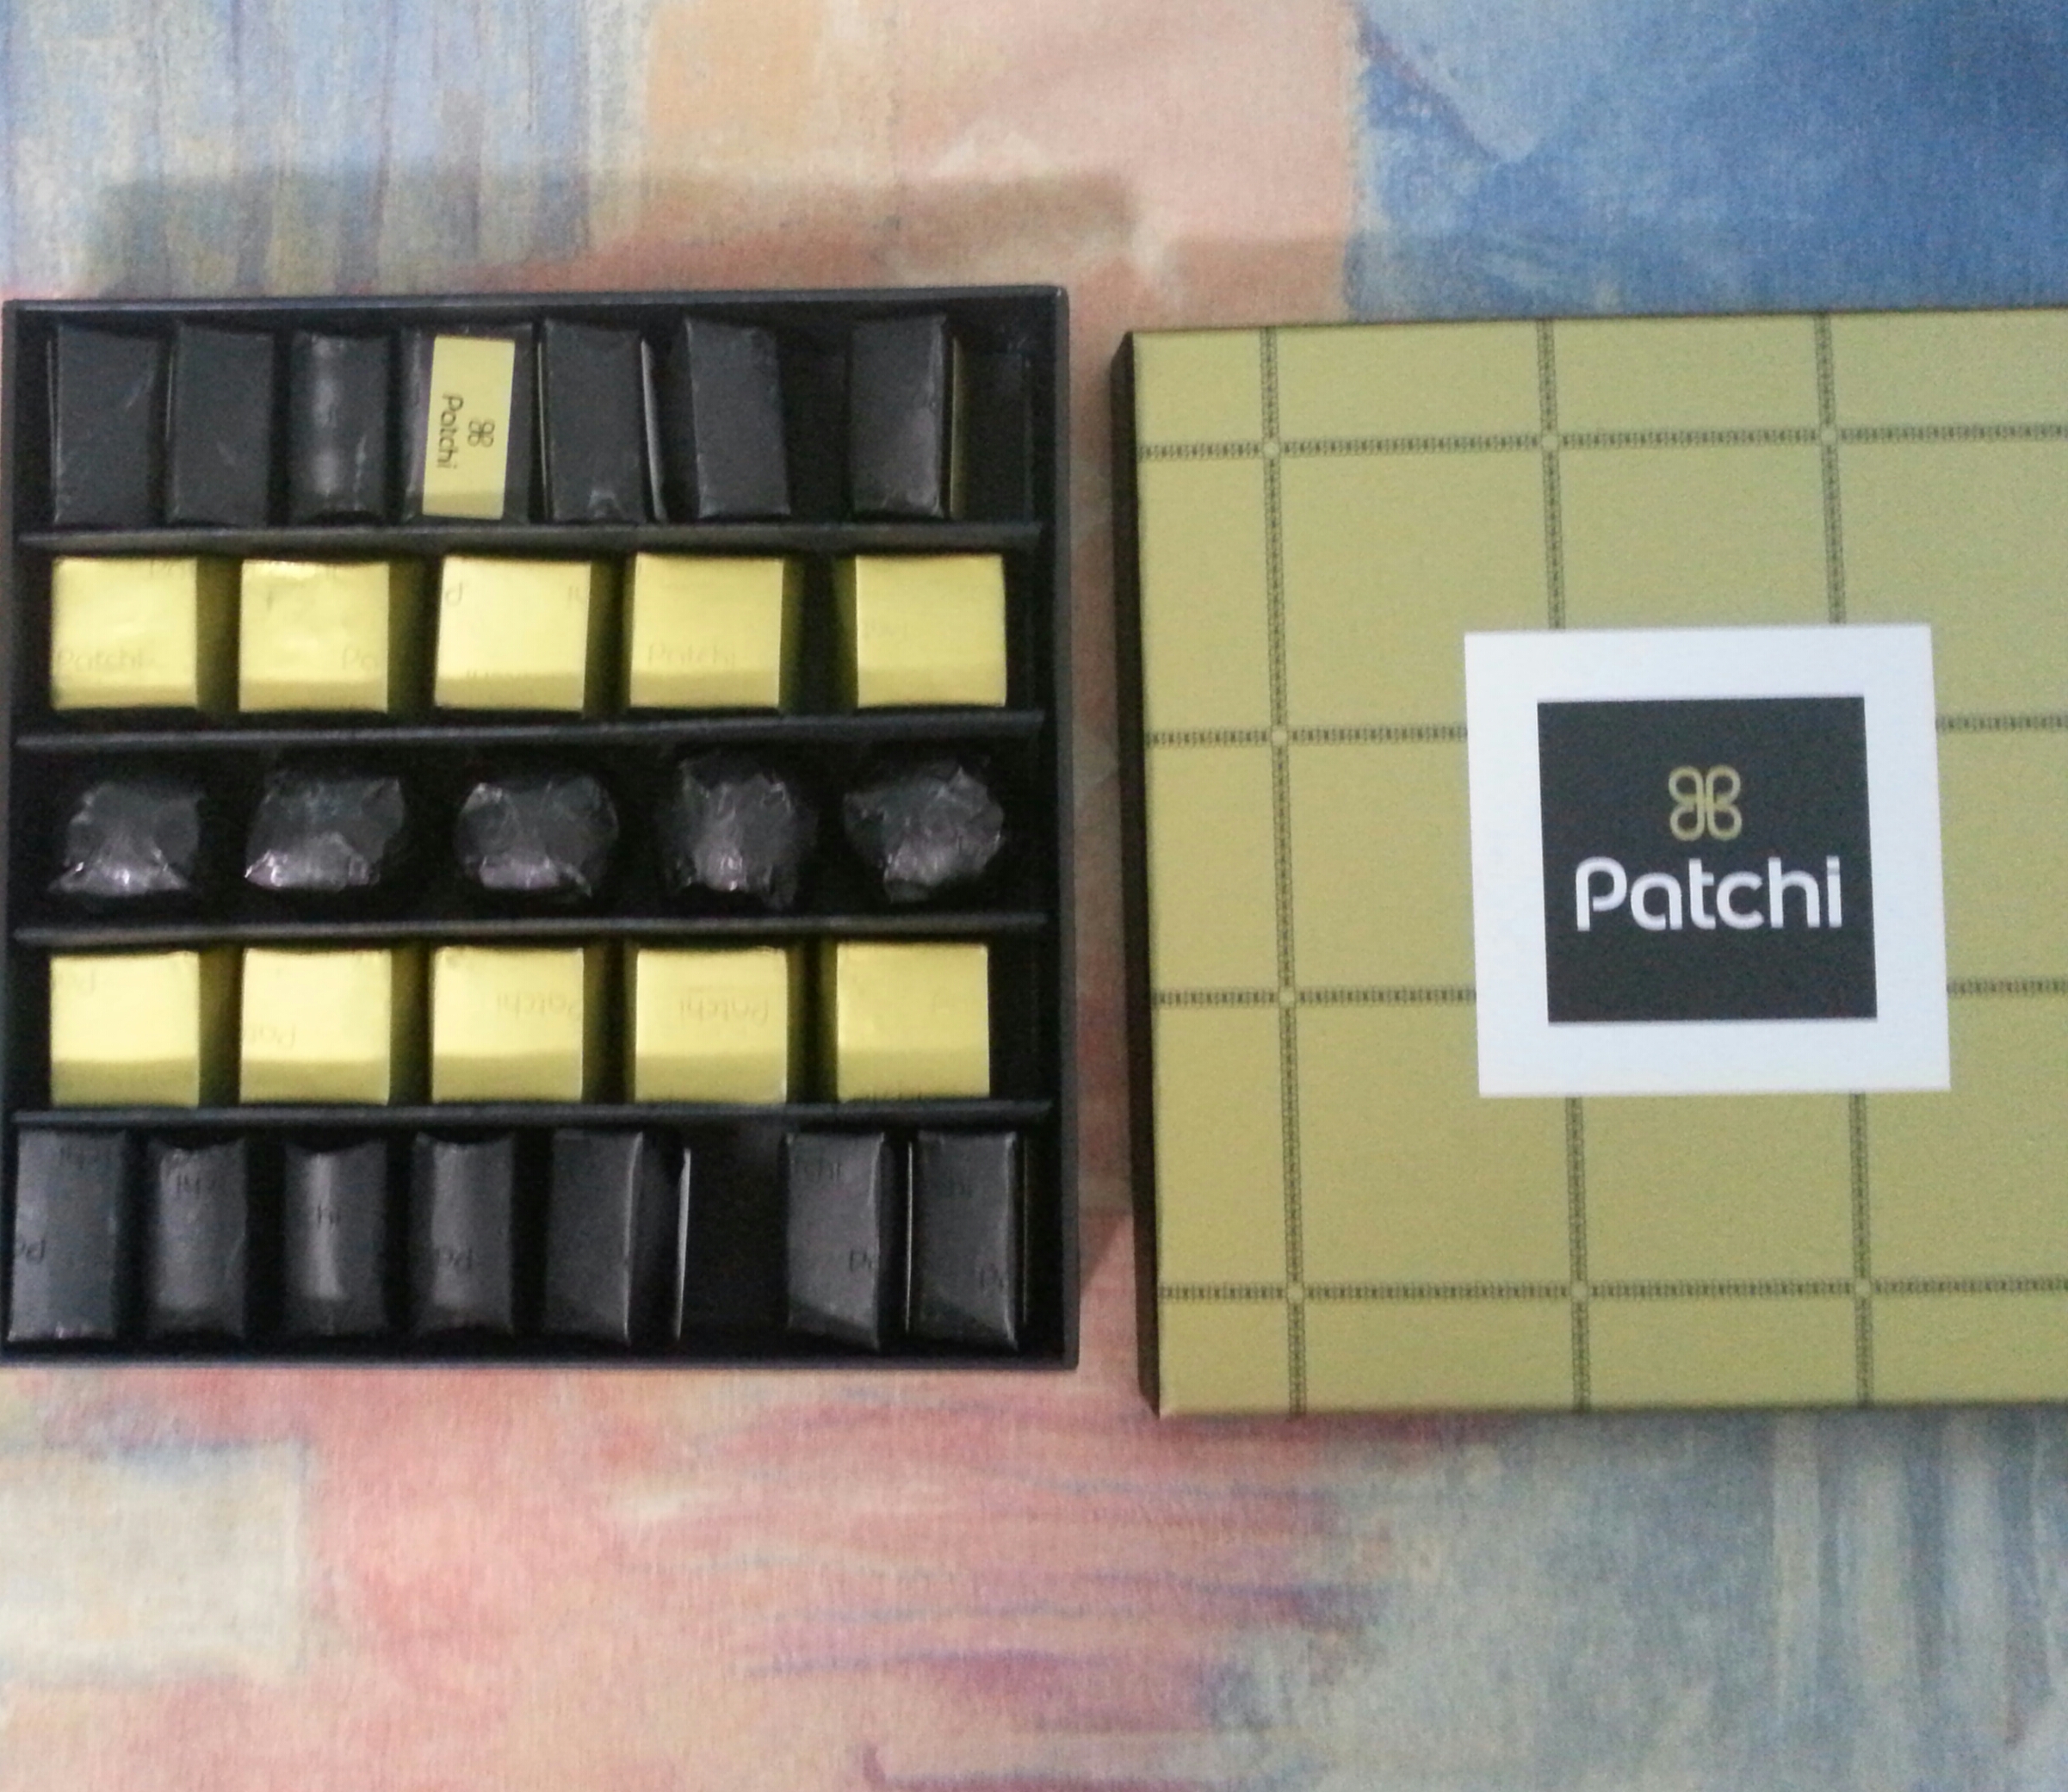 Patchi chocolate.